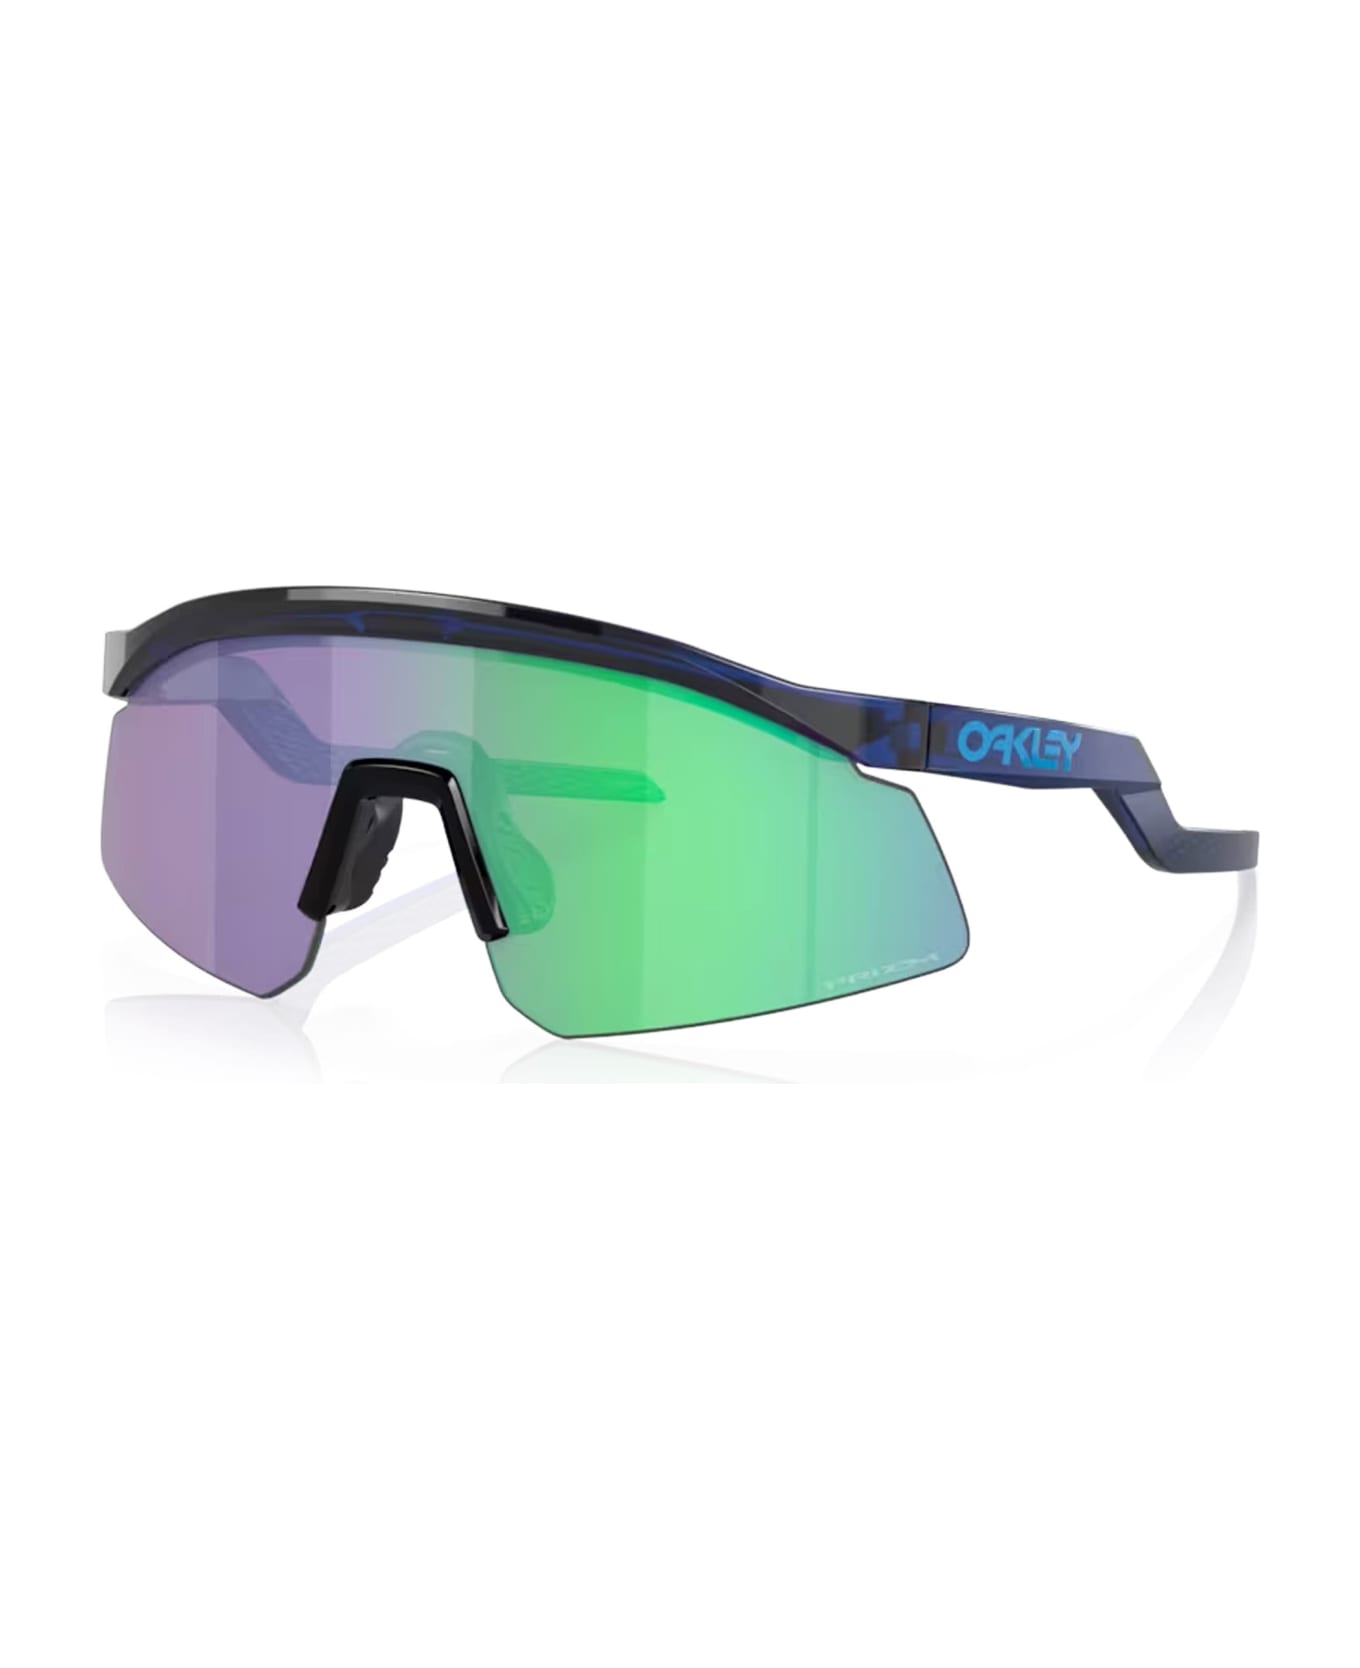 Oakley Hydra - Translucent Blue / Prizm Jade Sunglasses - blue